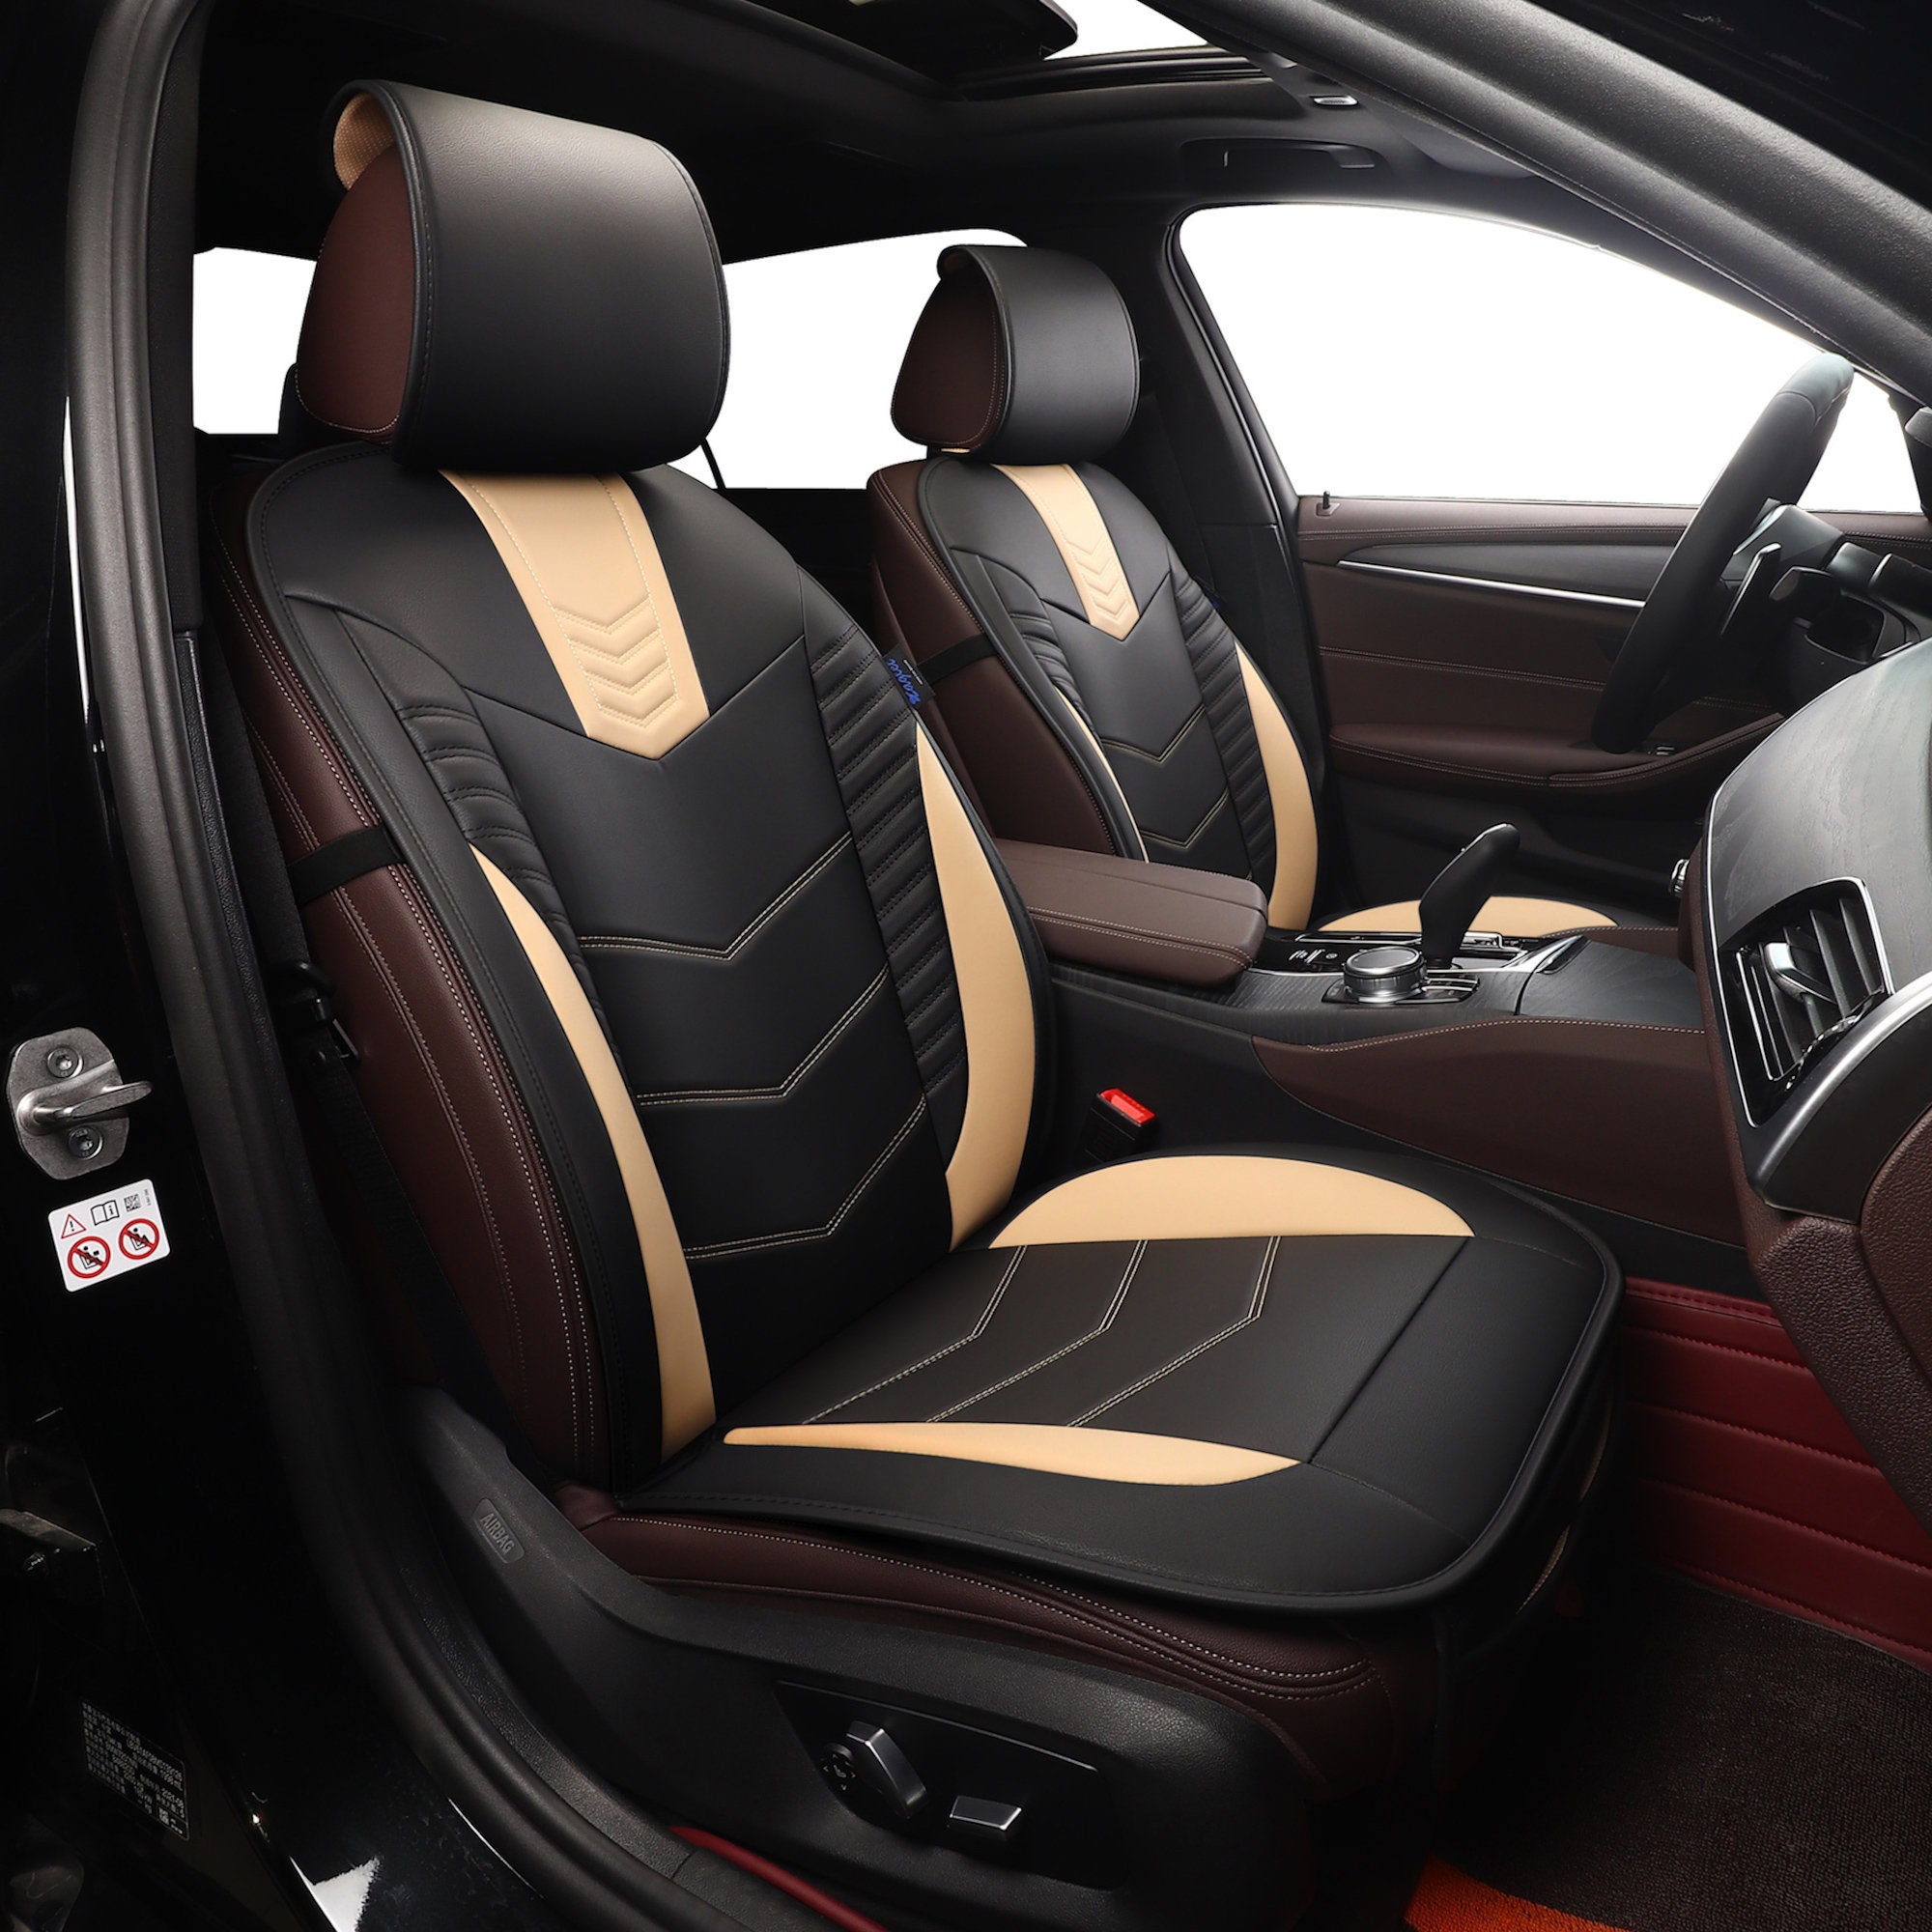 Leather car seat covers -  España